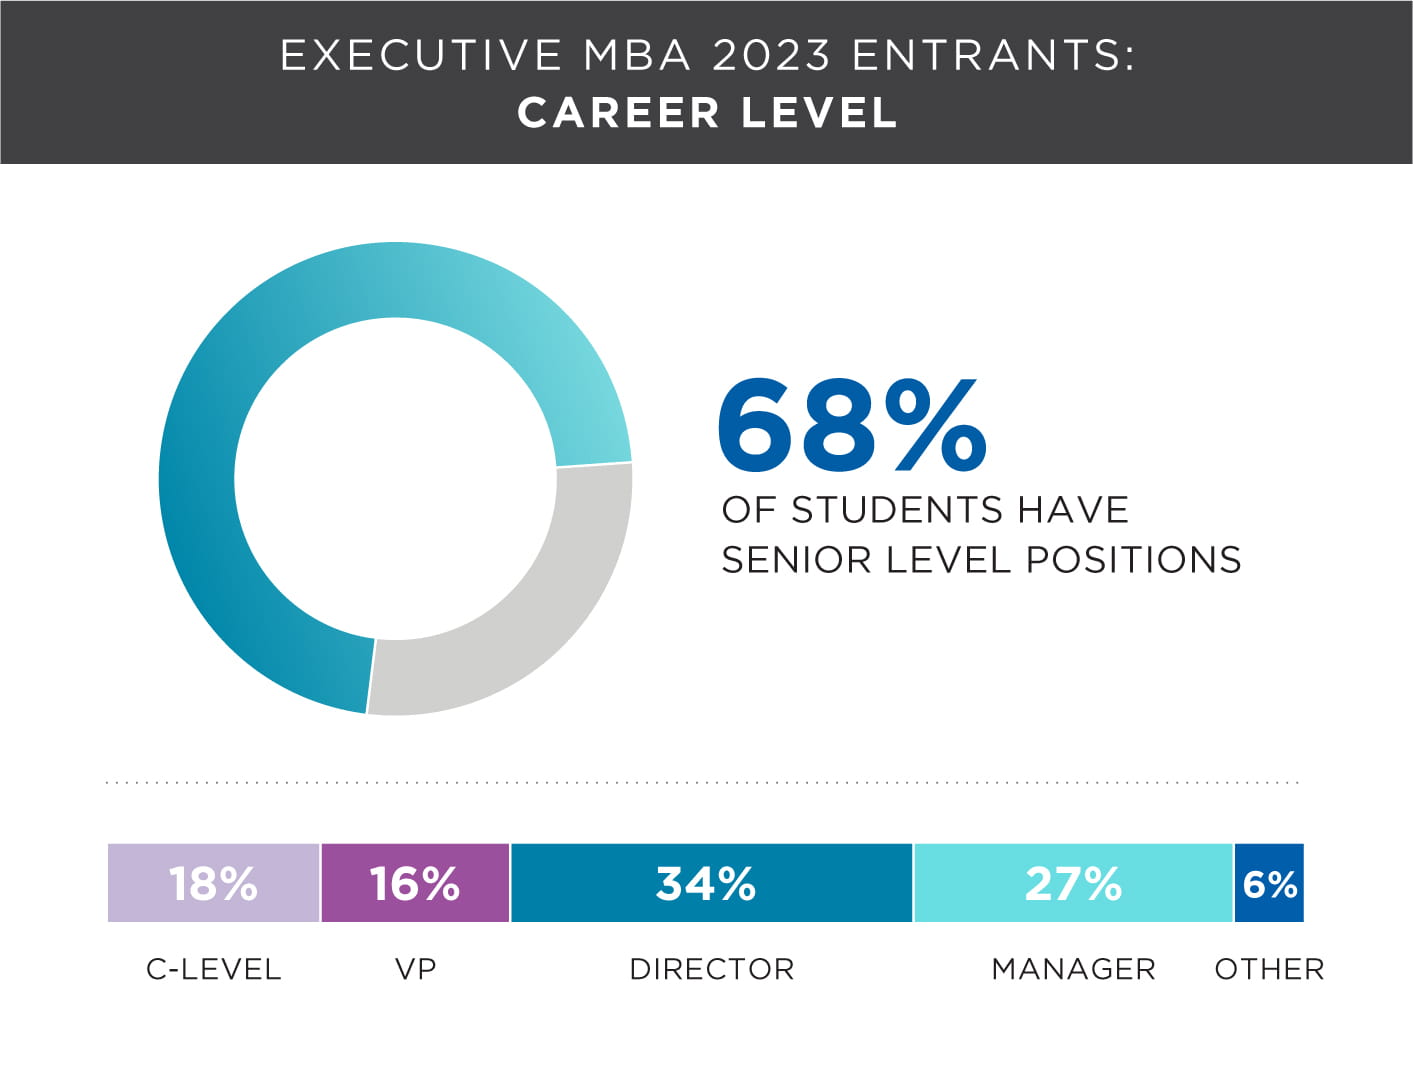 Executive MBA Program in Hong Kong